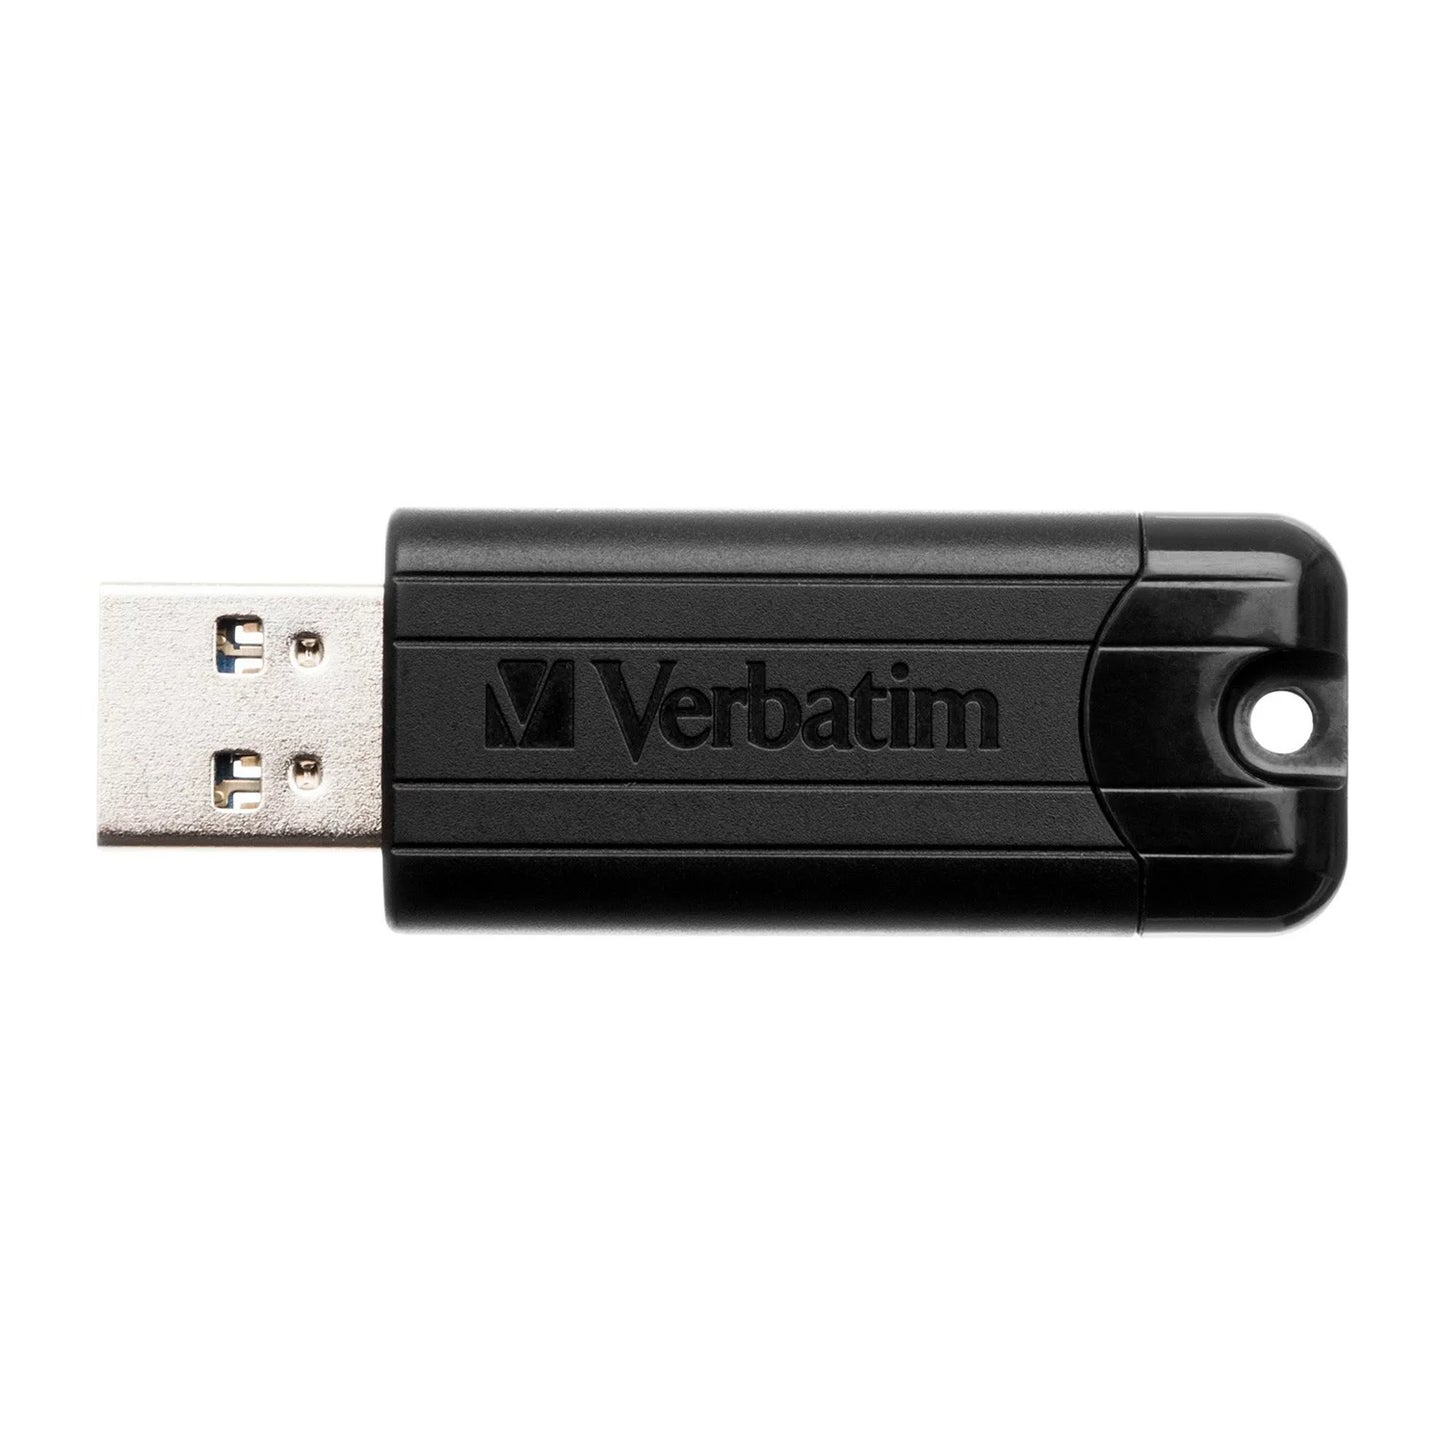 VERBATIM USB 256GB 3.0 V3 PINSTRIPE STORE N GO DRIVE